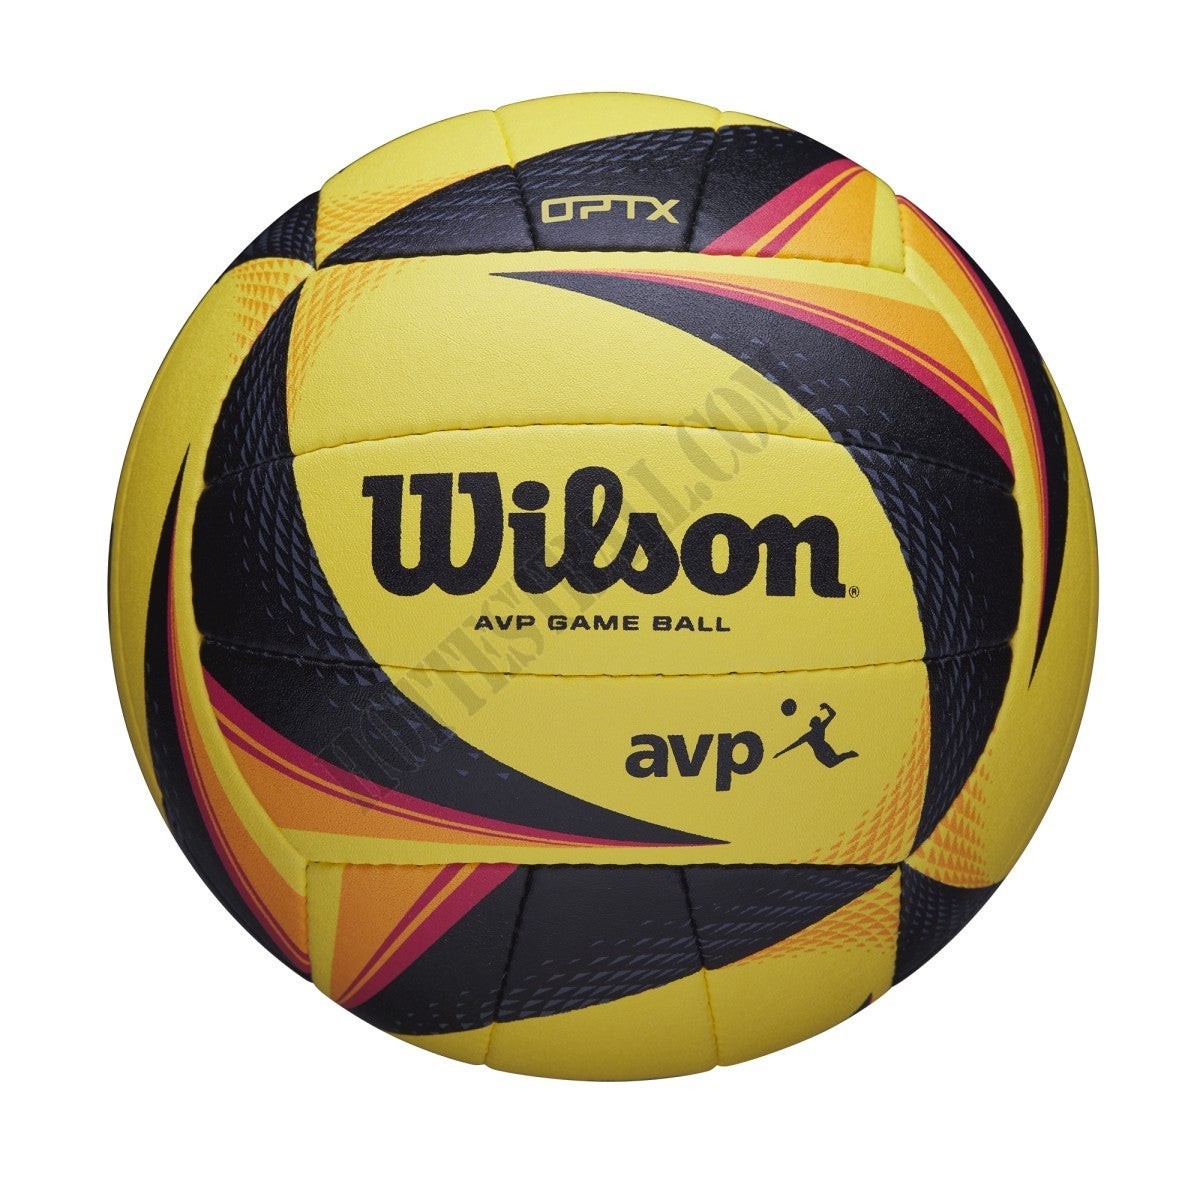 OPTX AVP Game Volleyball - Deflated - Wilson Discount Store - OPTX AVP Game Volleyball - Deflated - Wilson Discount Store